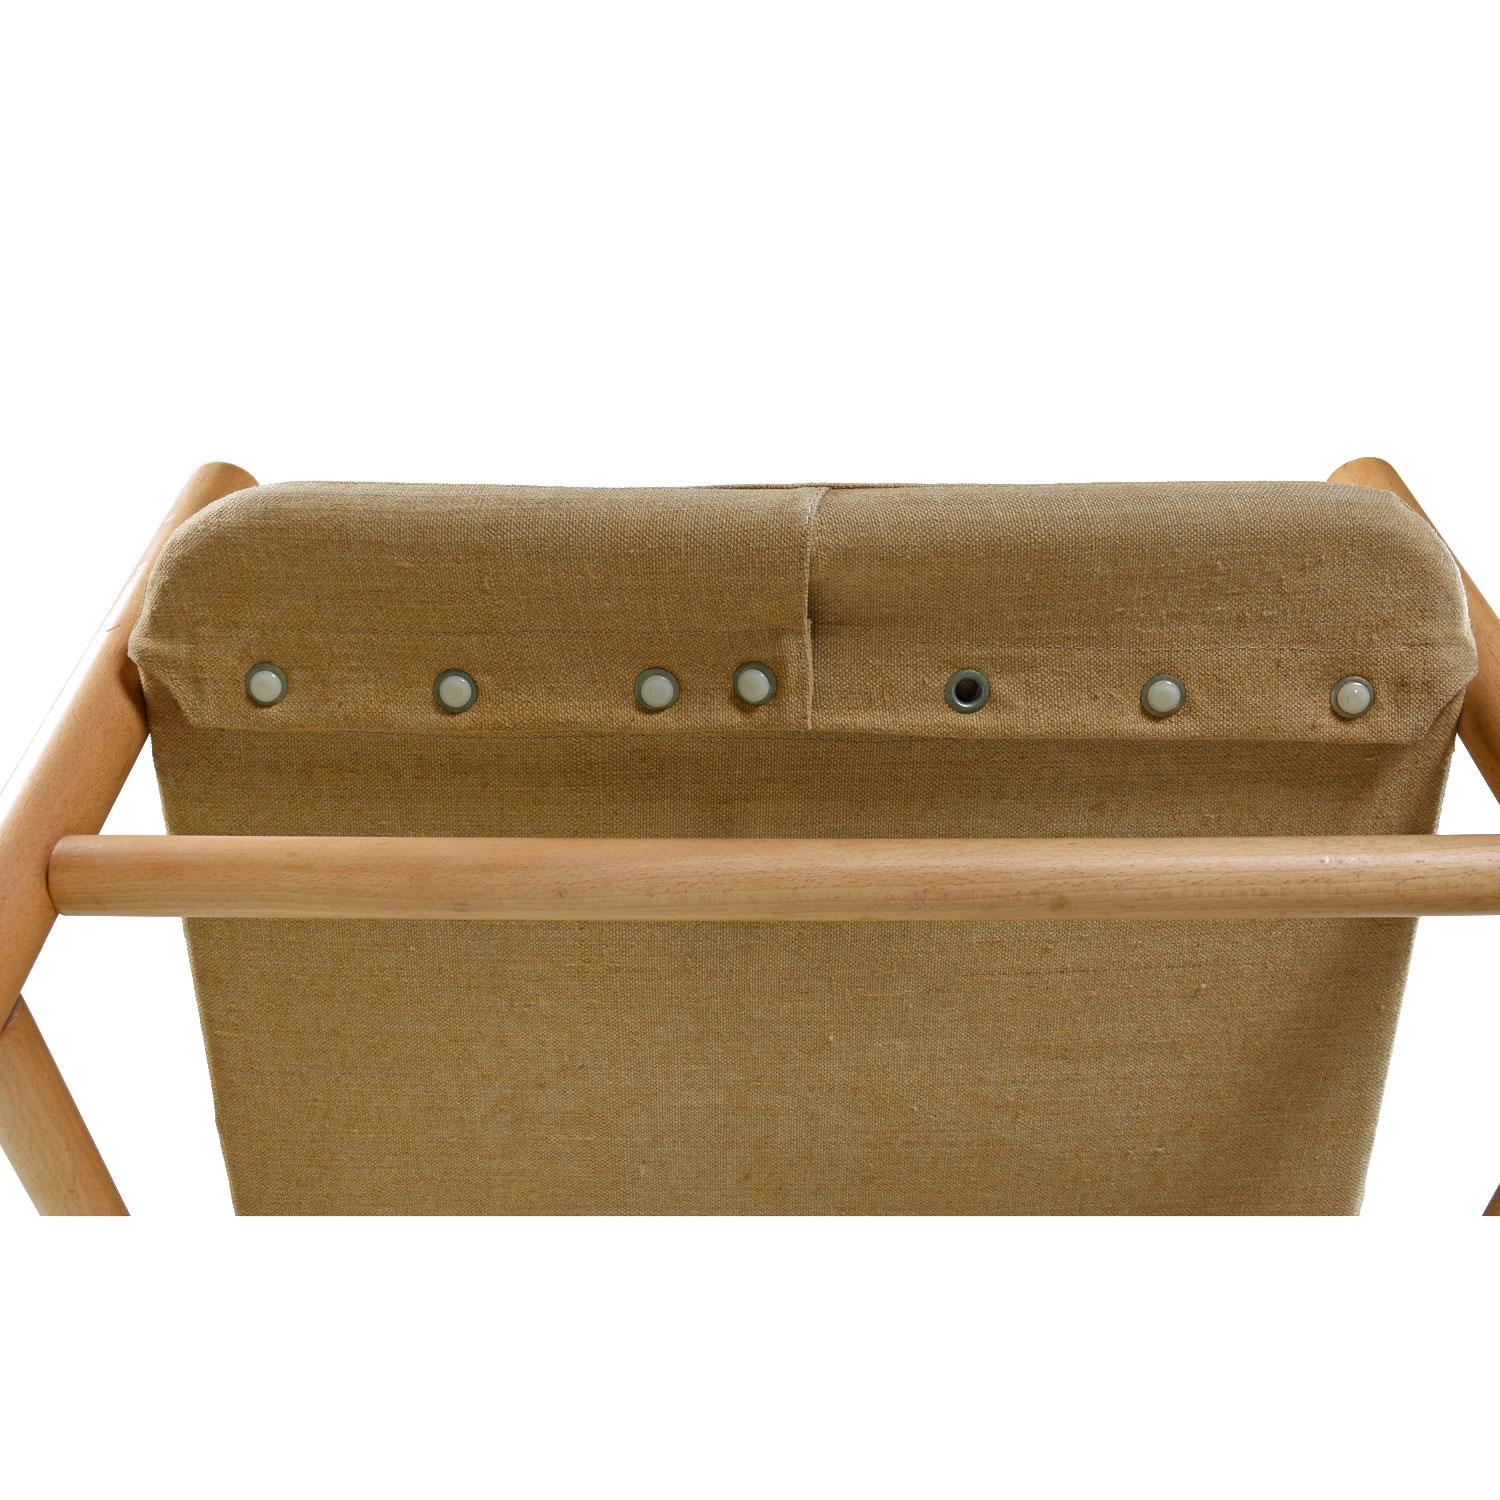 Fabric Original Solid Beechwood DUX Safari Junker Chairs by Bror Boije Made in Sweden